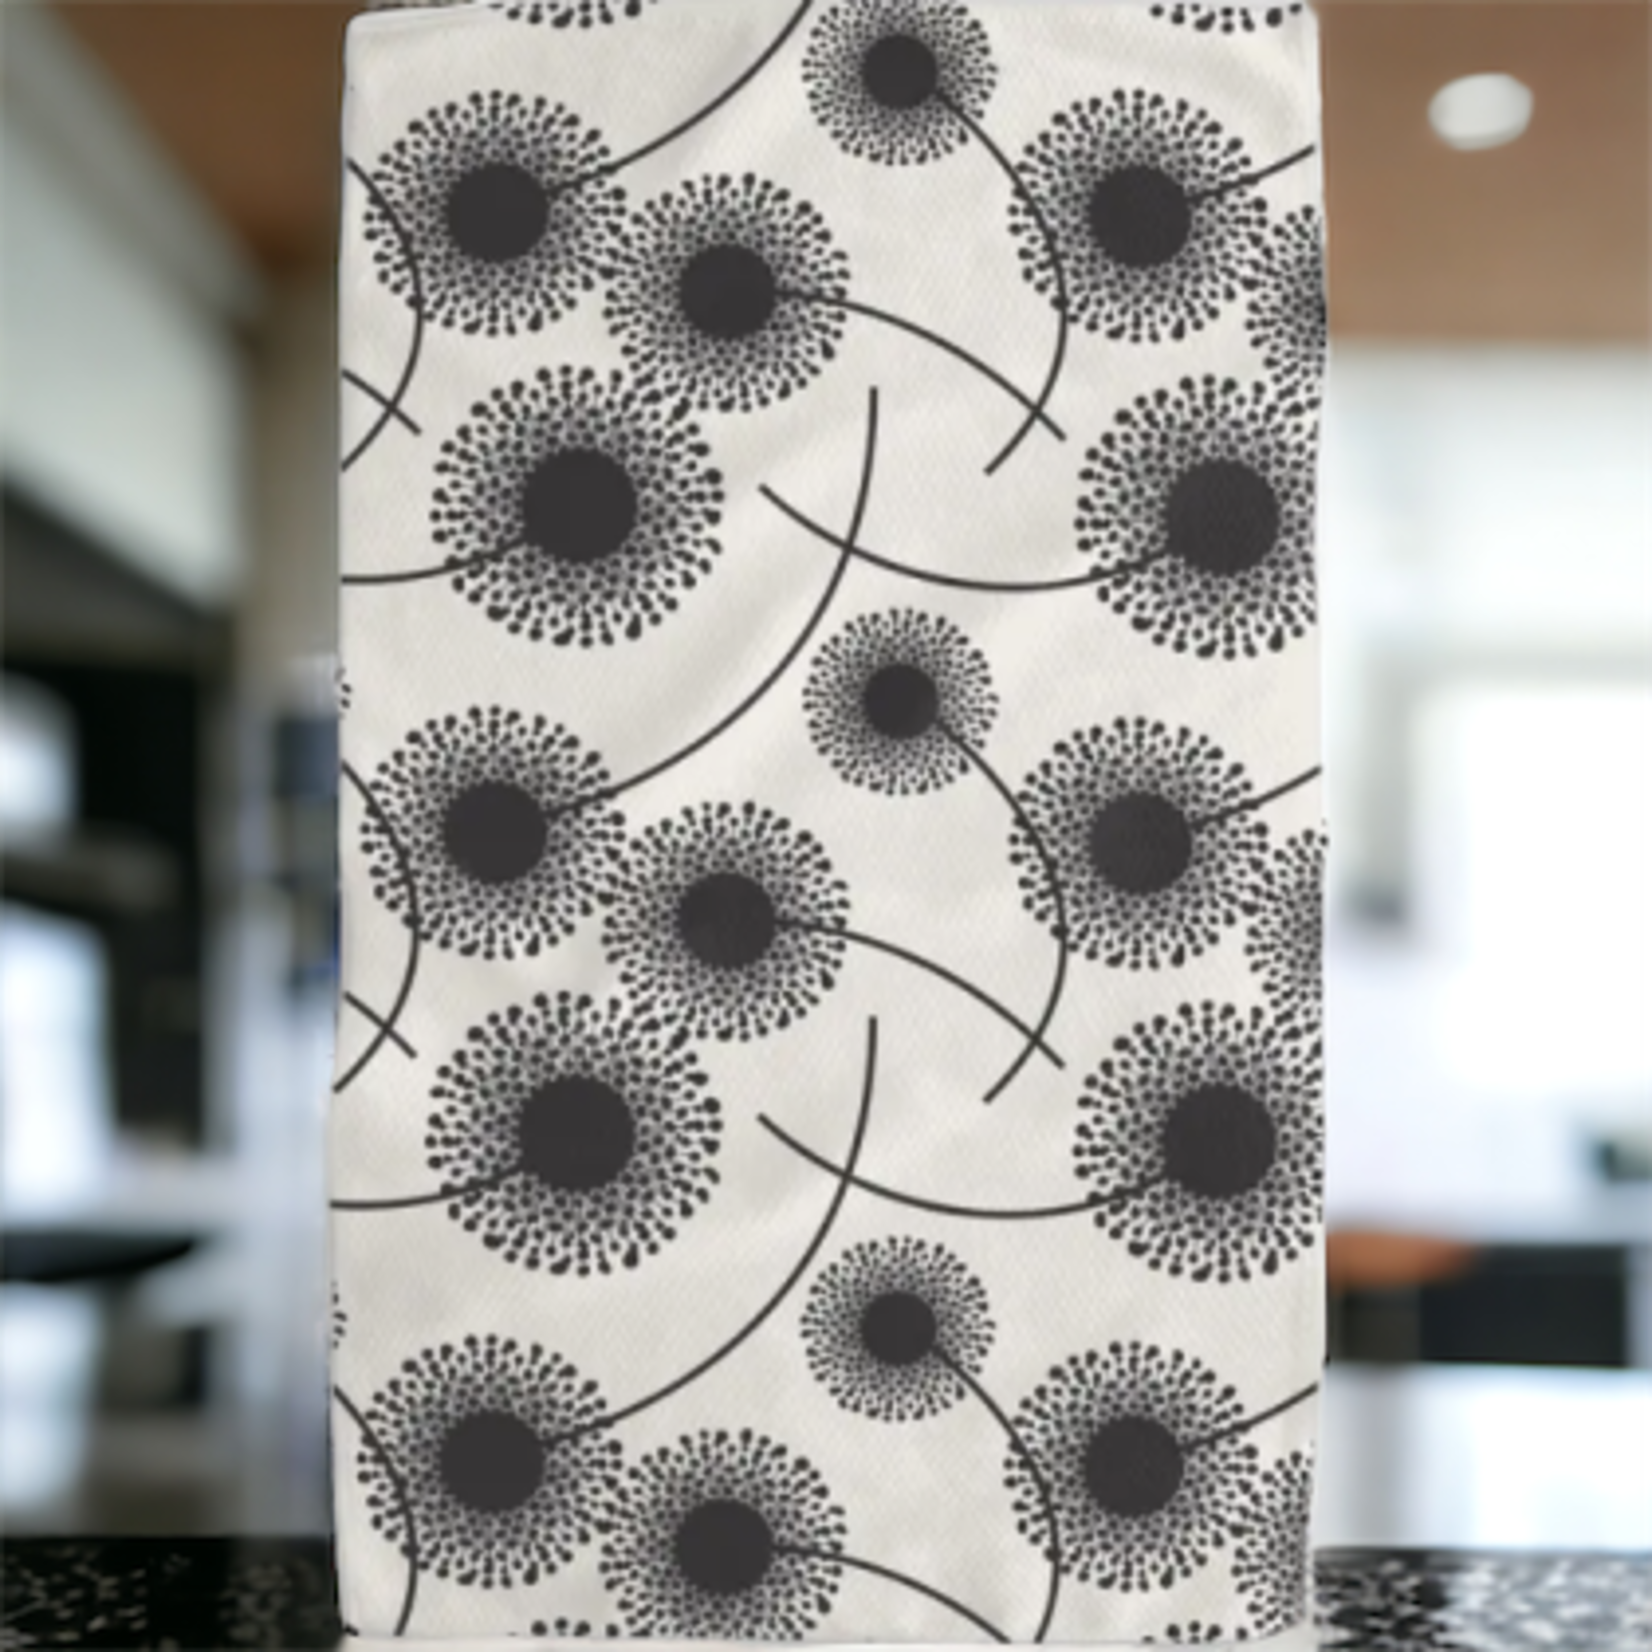 Lima Bean Geometry Fully Bloomed “Not  Paper Towel” Tea Towel